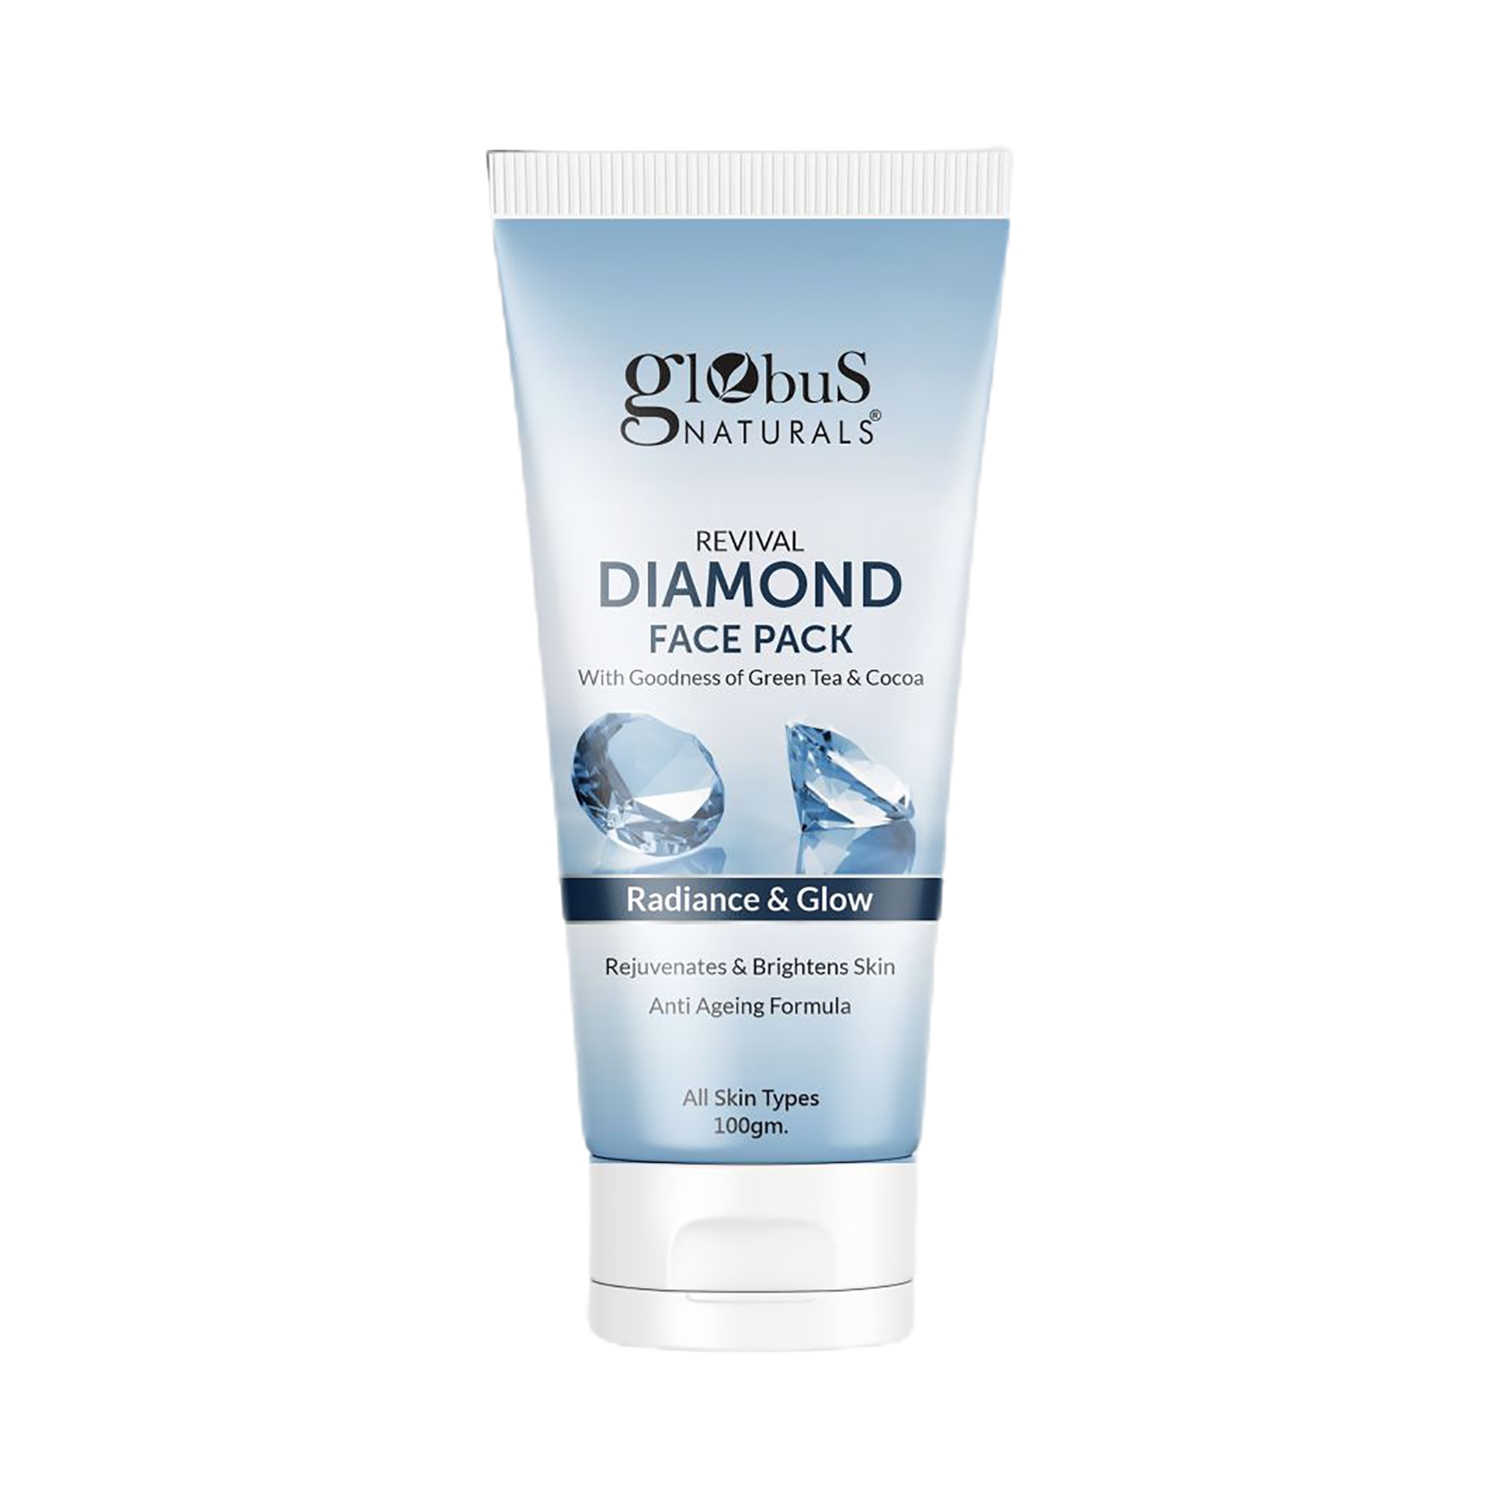 Globus Naturals Revival Diamond Face Pack (100g)